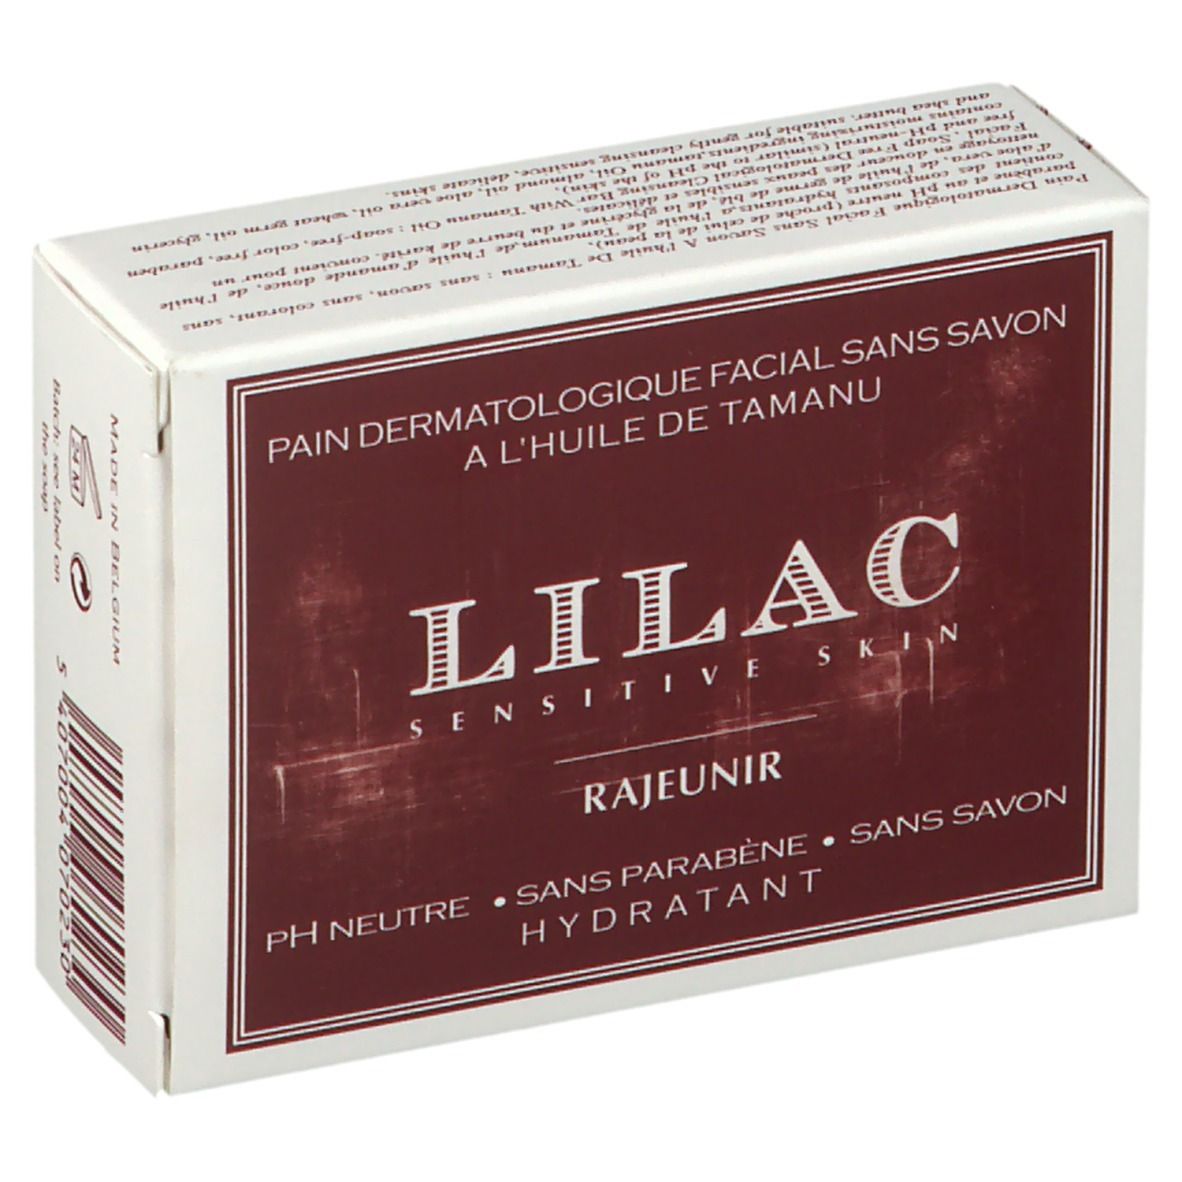 INCONNU Lilac Rejuvenate Seife